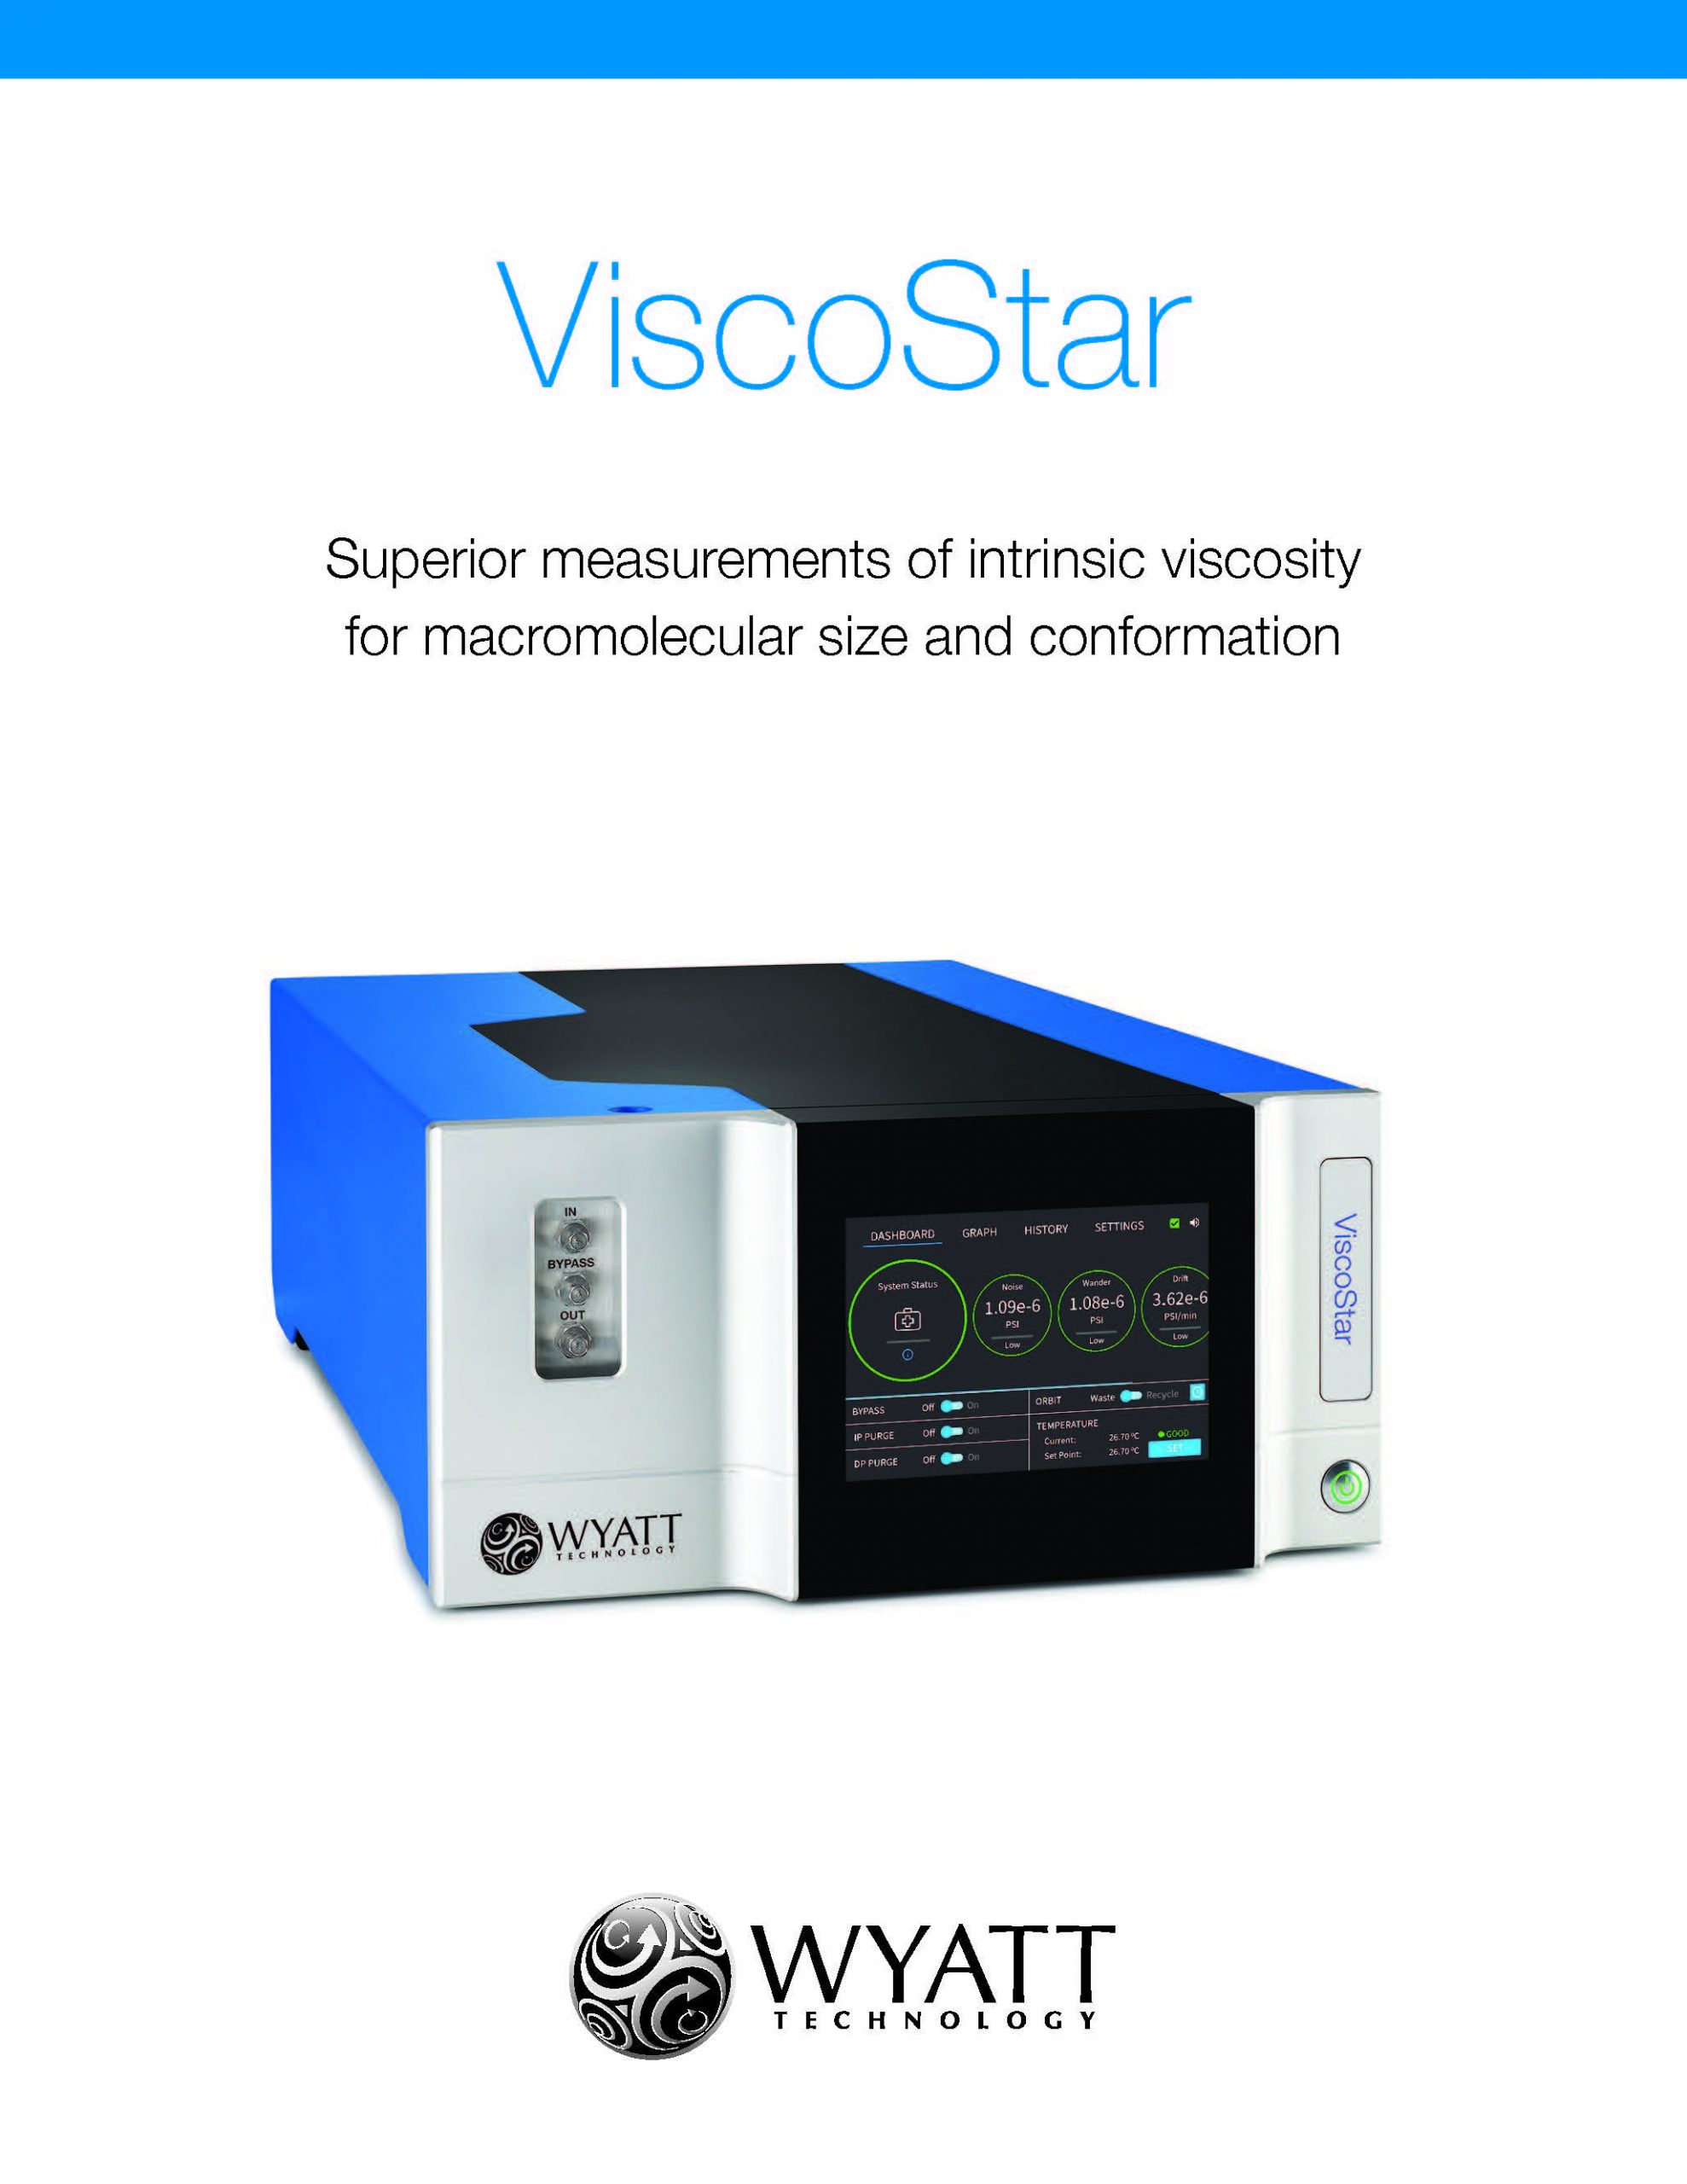 ViscoStar Brochure Request